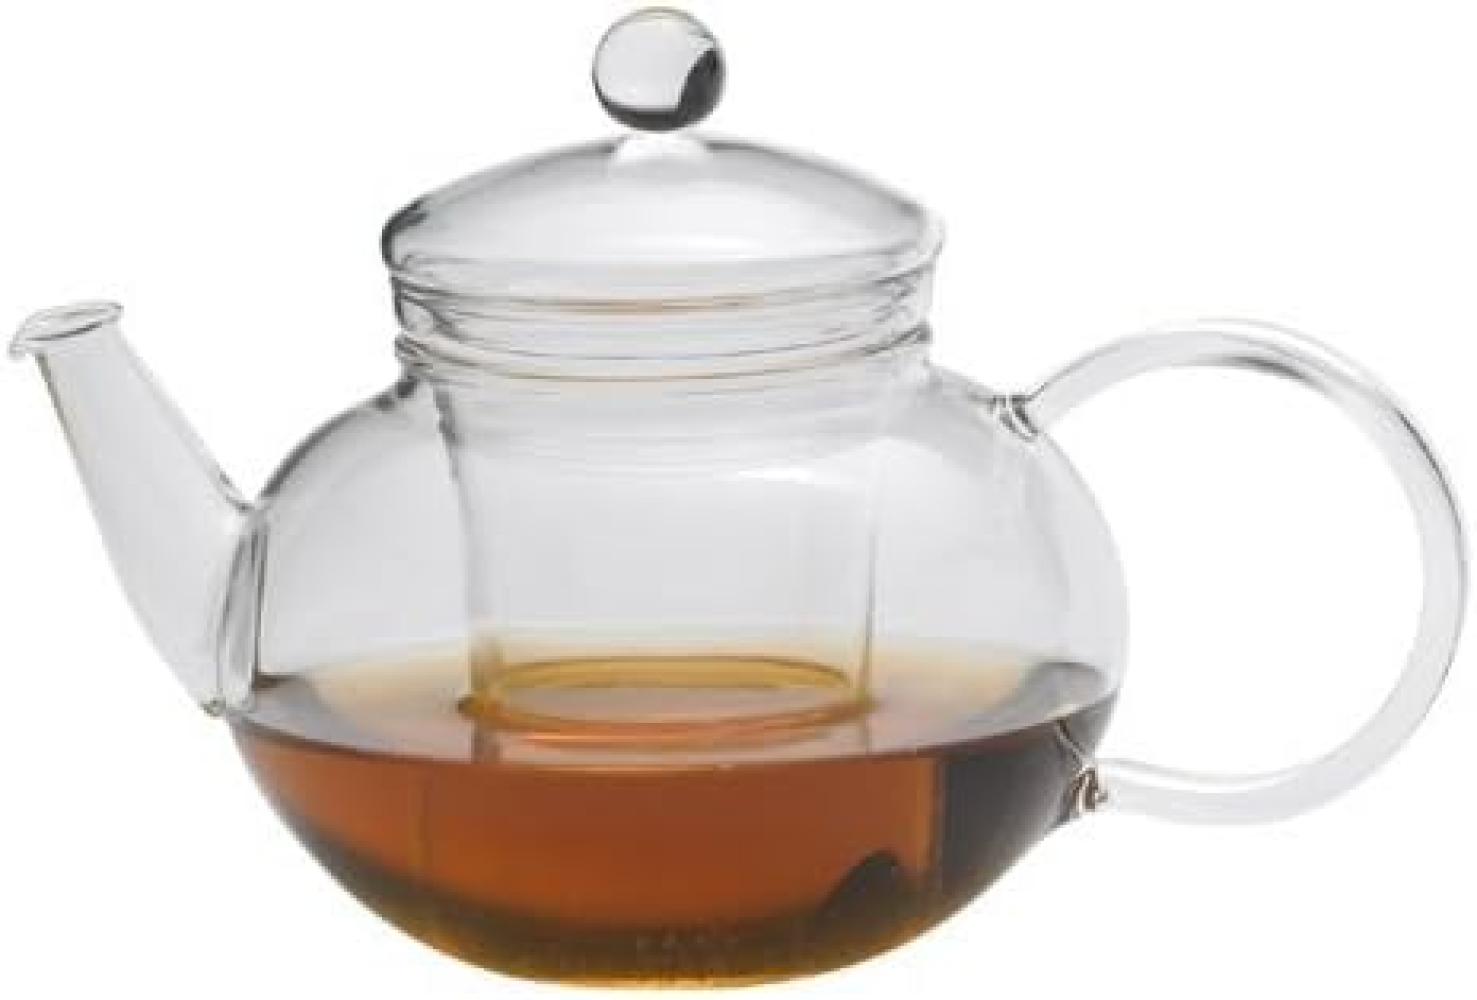 Jenaer Glas Teekanne MIKO – der Klassiker unter den Teekannen 0,8 Liter Bild 1